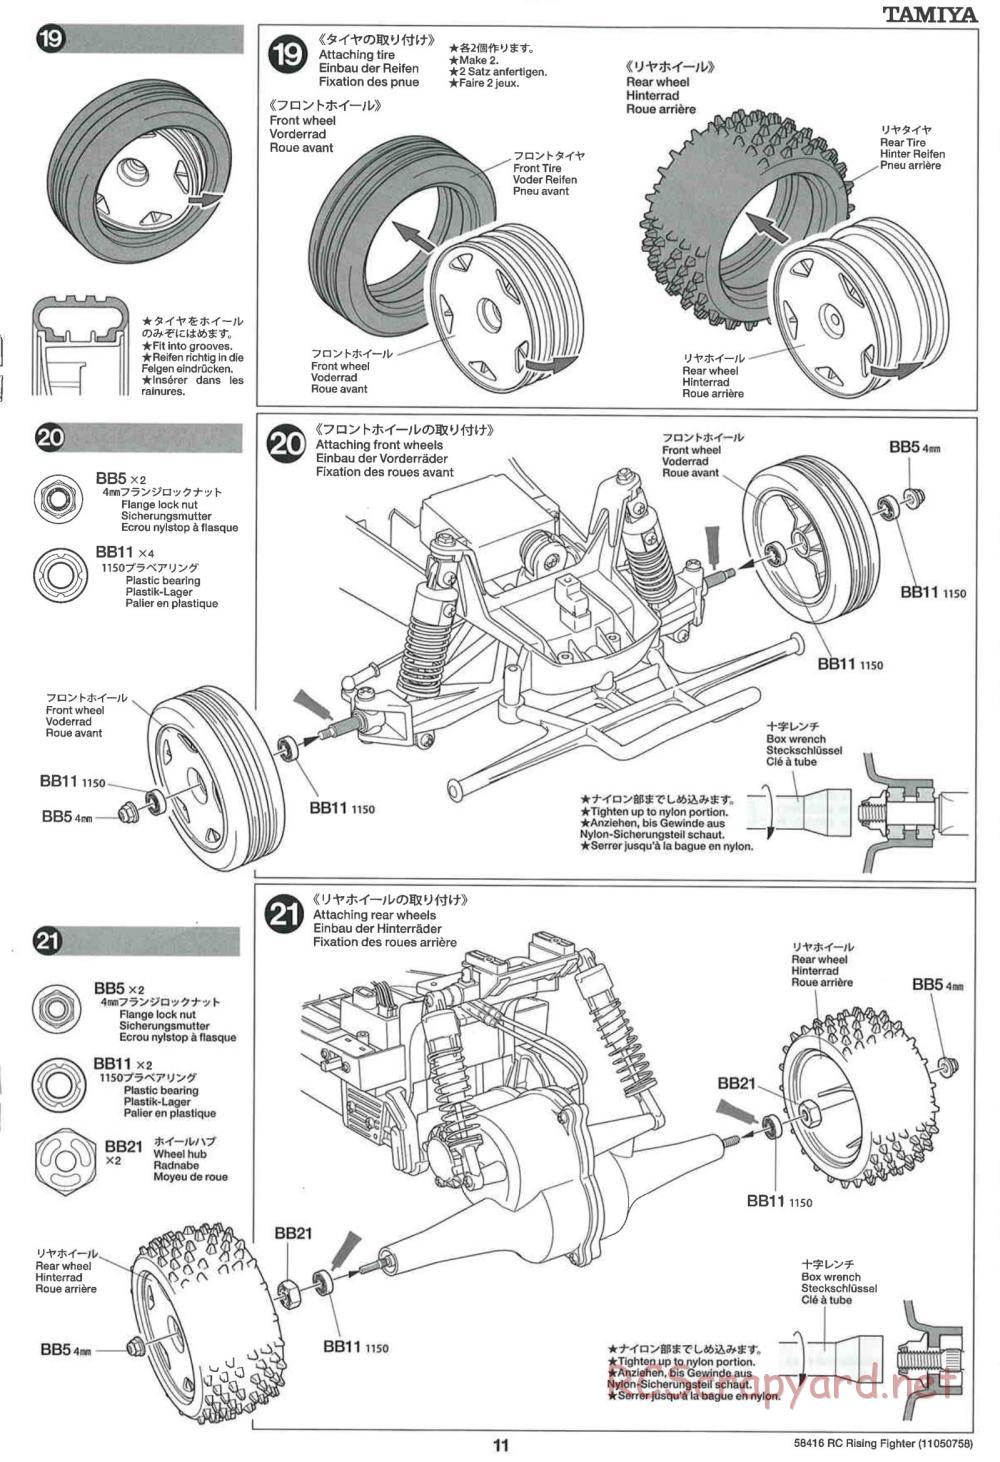 Tamiya - Rising Fighter Chassis - Manual - Page 11